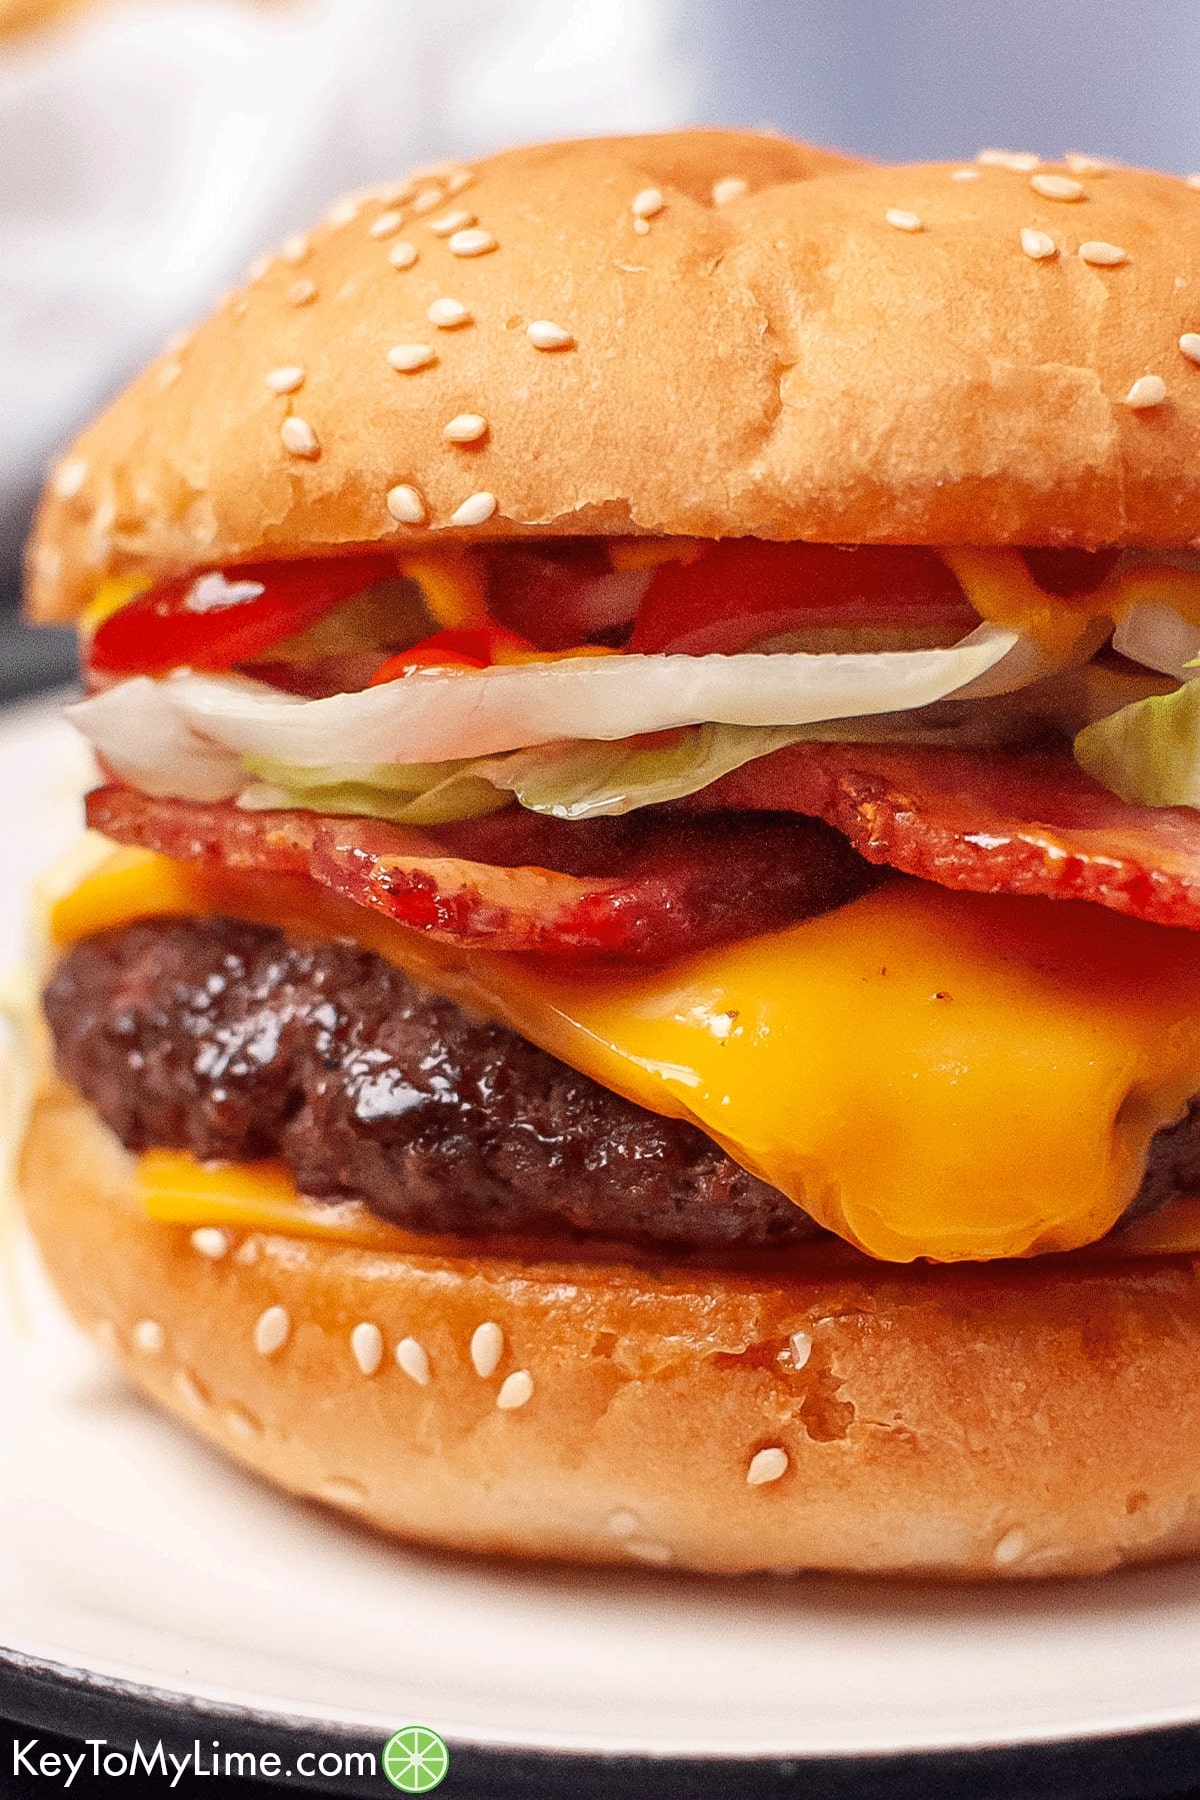 A close up image of a Travis Scott burger served on a sesame seed bun.